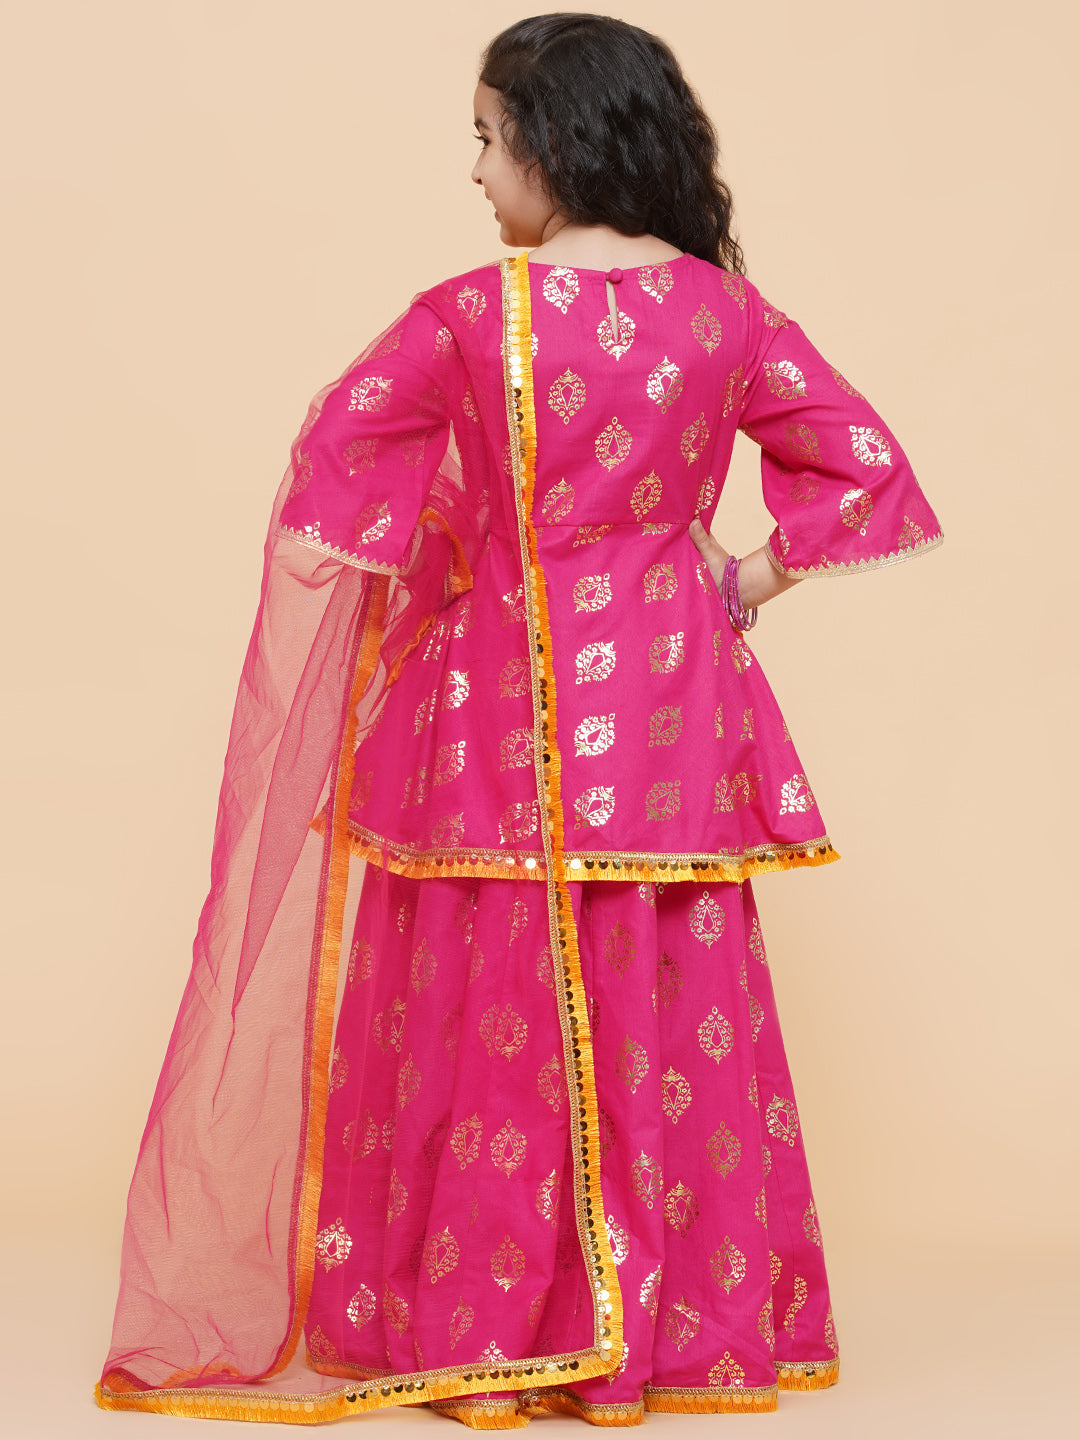 Bitiya By Bhama Girls Pink Foil Printed Ready To Wear Lehenga & Blouse With Dupatta